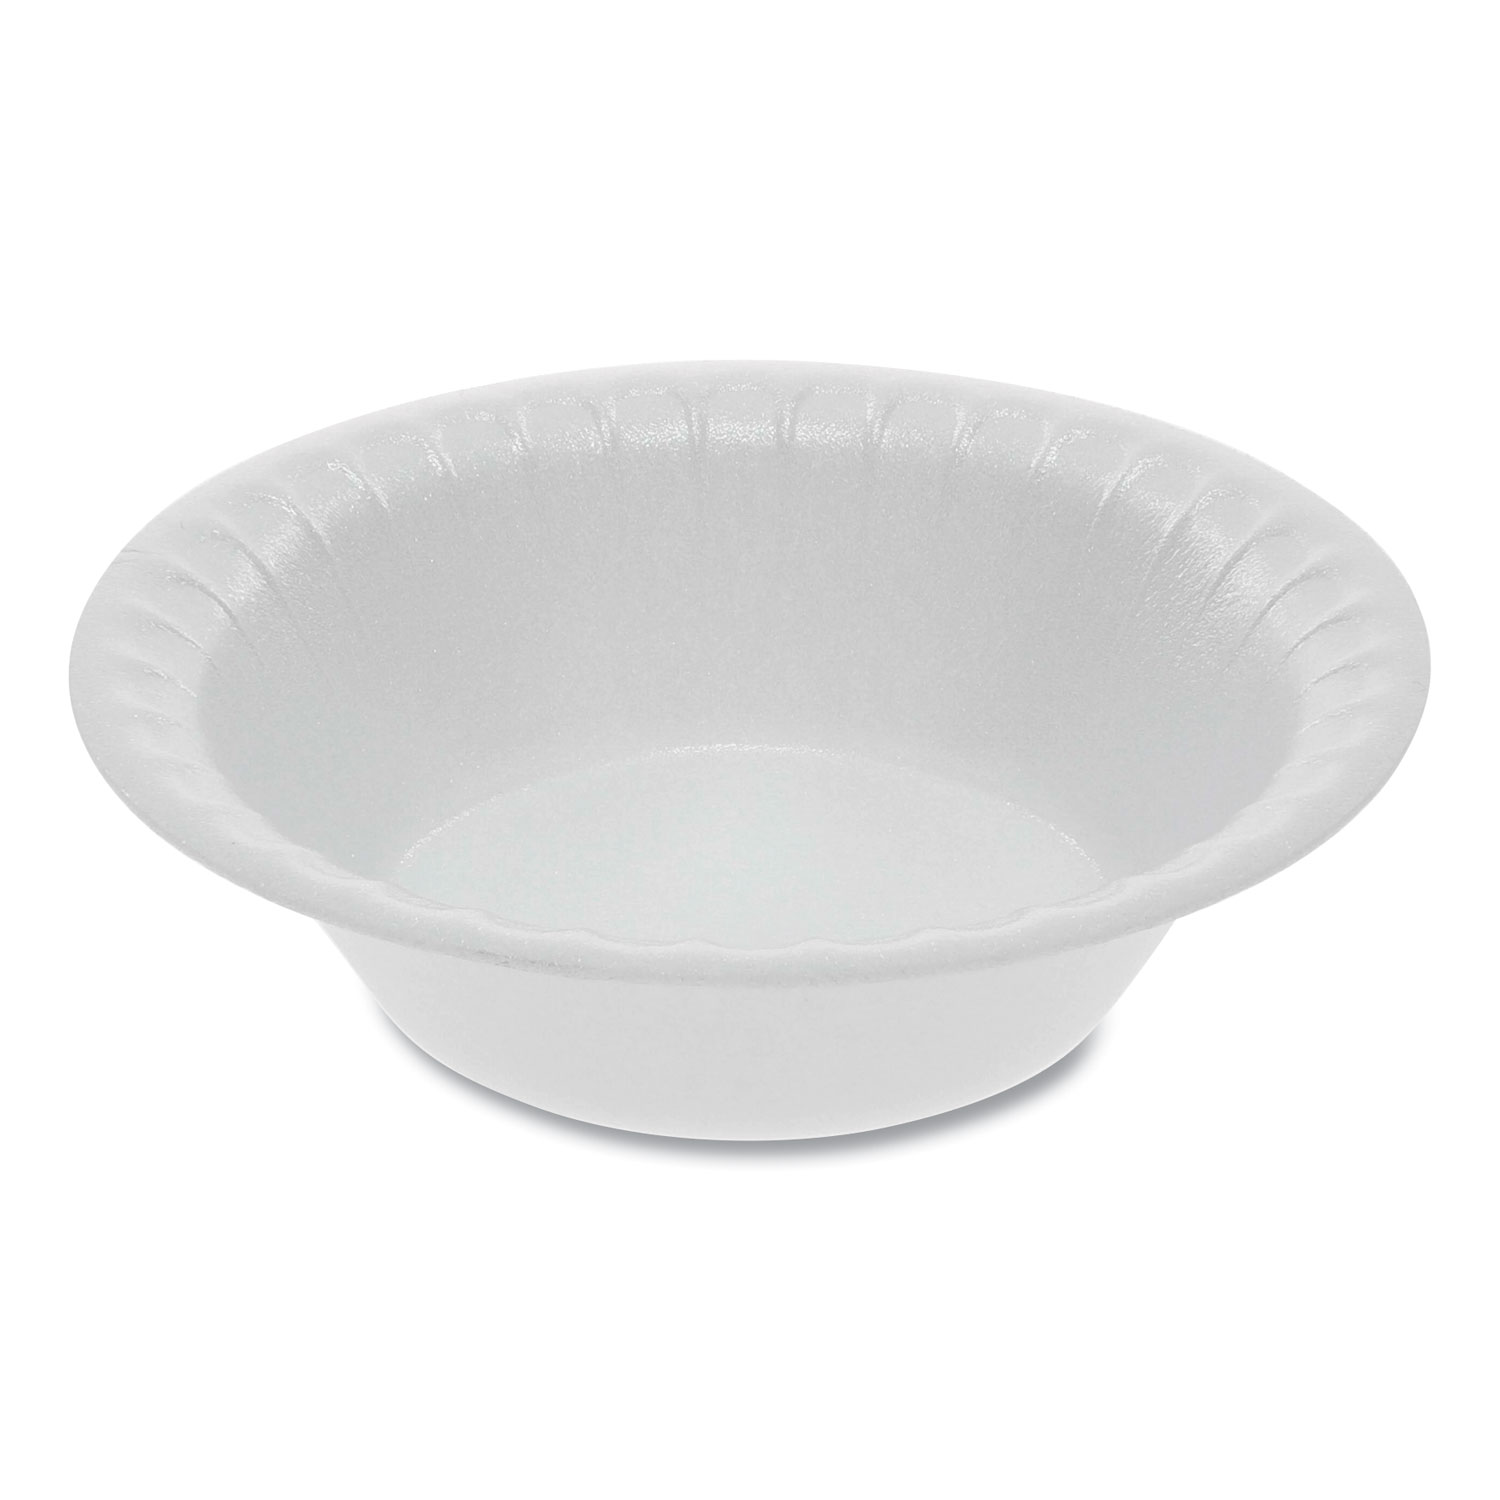  Pactiv YTH100040000 Unlaminated Foam Dinnerware, Bowl, 5 oz, 4.5 Diameter, White, 1,250/Carton (PCTYTH100040000) 